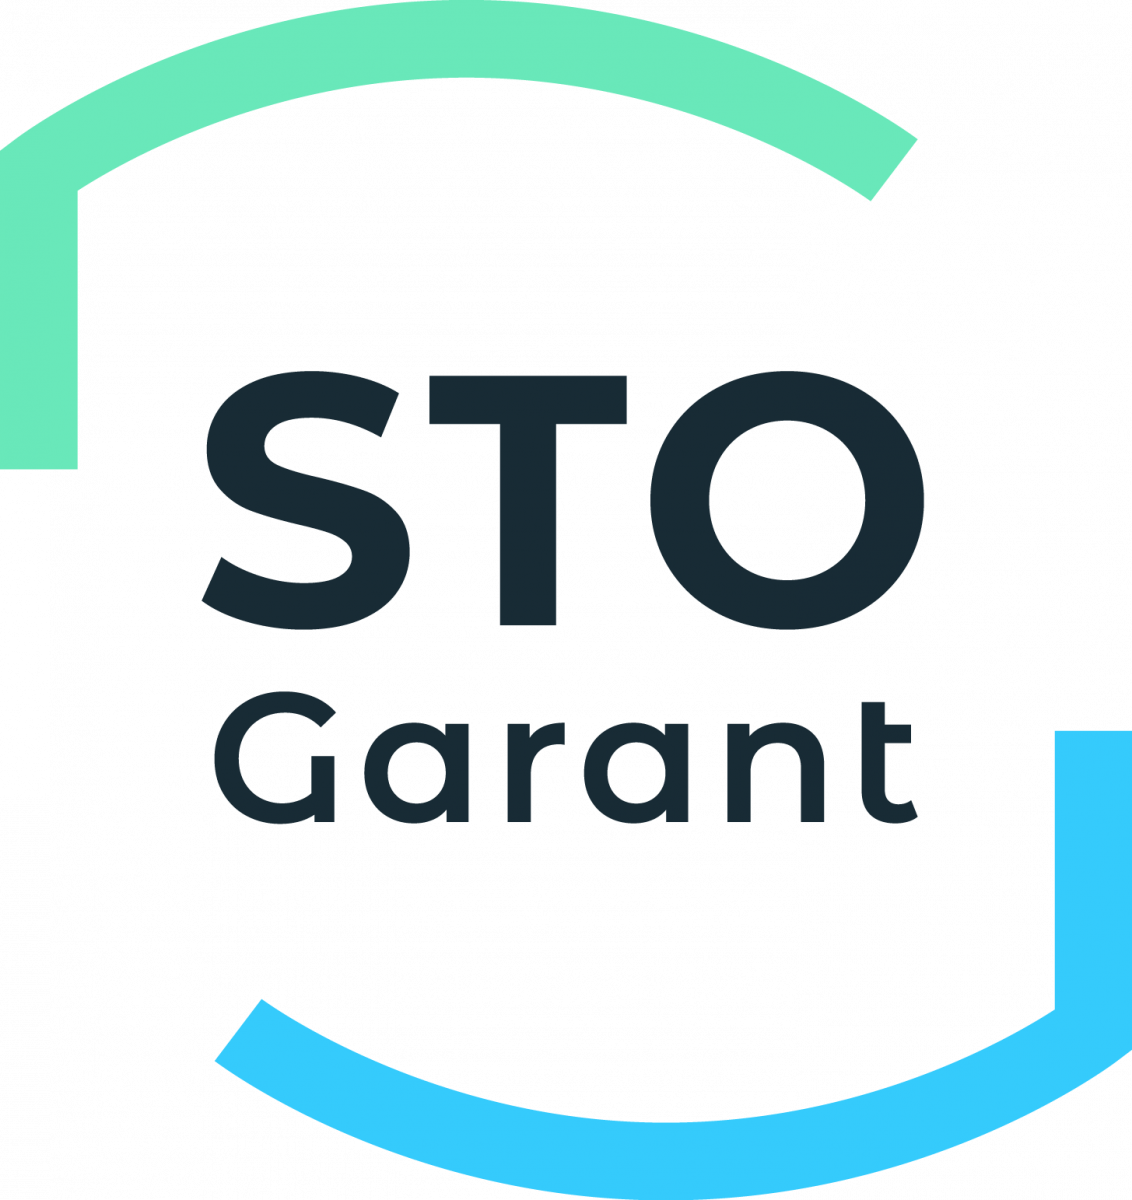 STO Garant